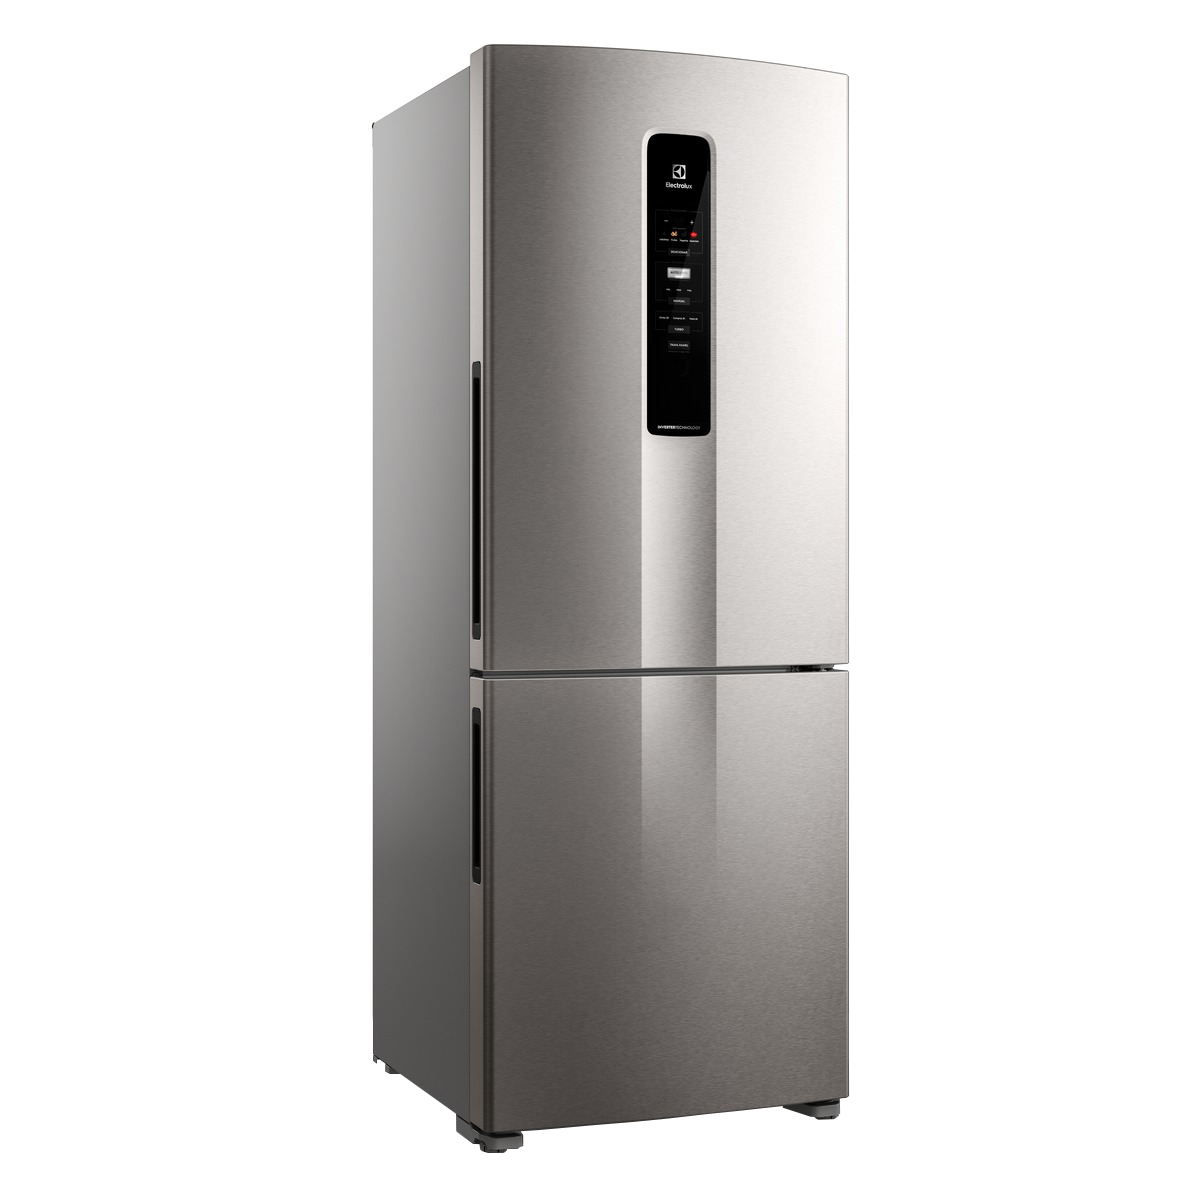 Geladeira Refrigerador Electrolux 490L Frost Free Bottom Freezer Duplex Ib7s - Inox - 220 Volts